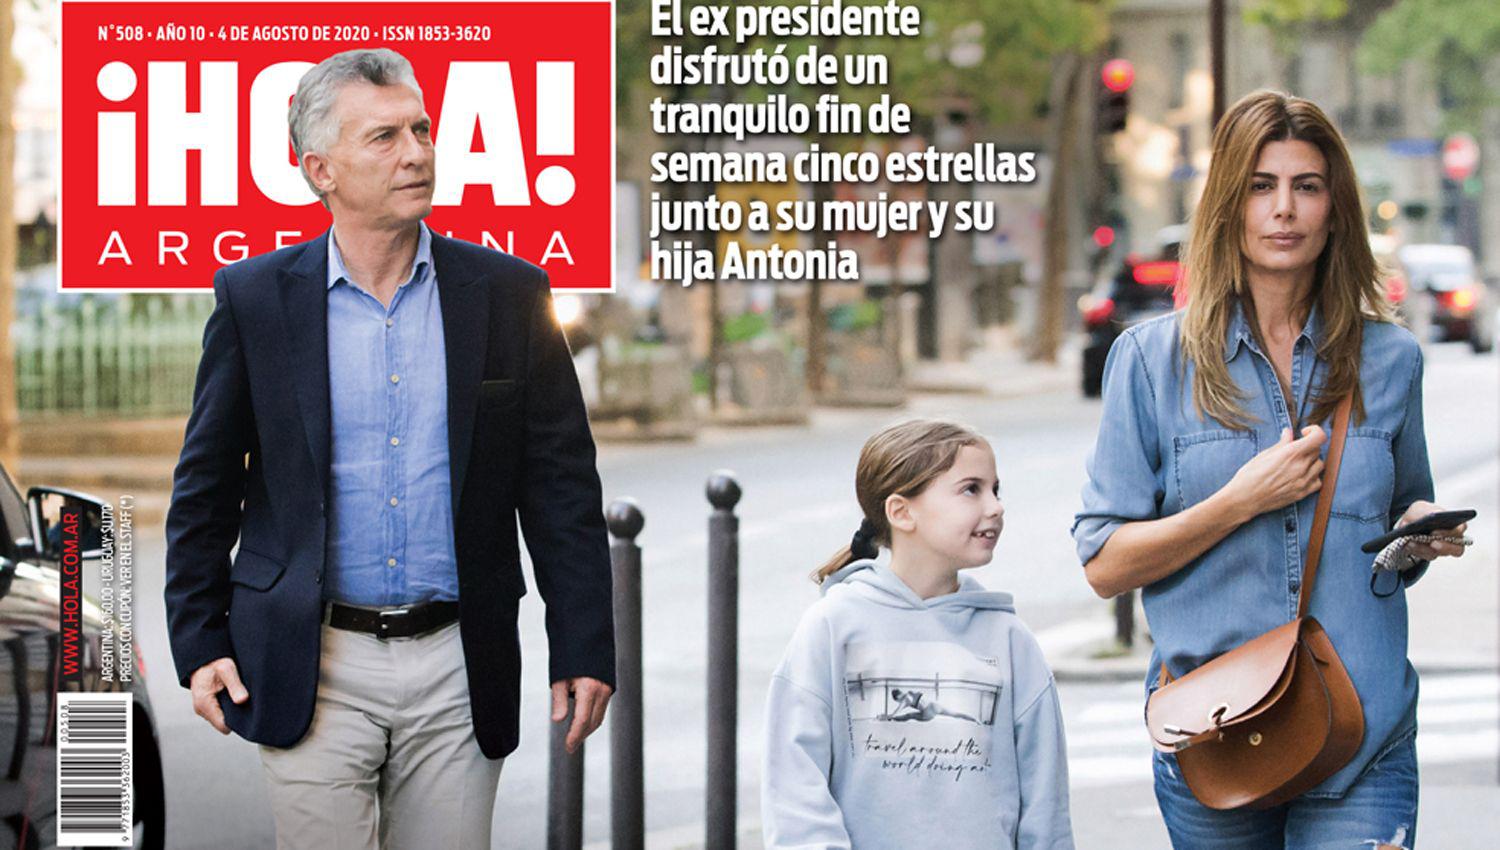 Llega una imperdible edicioacuten de la revista iexclHOLA Argentina